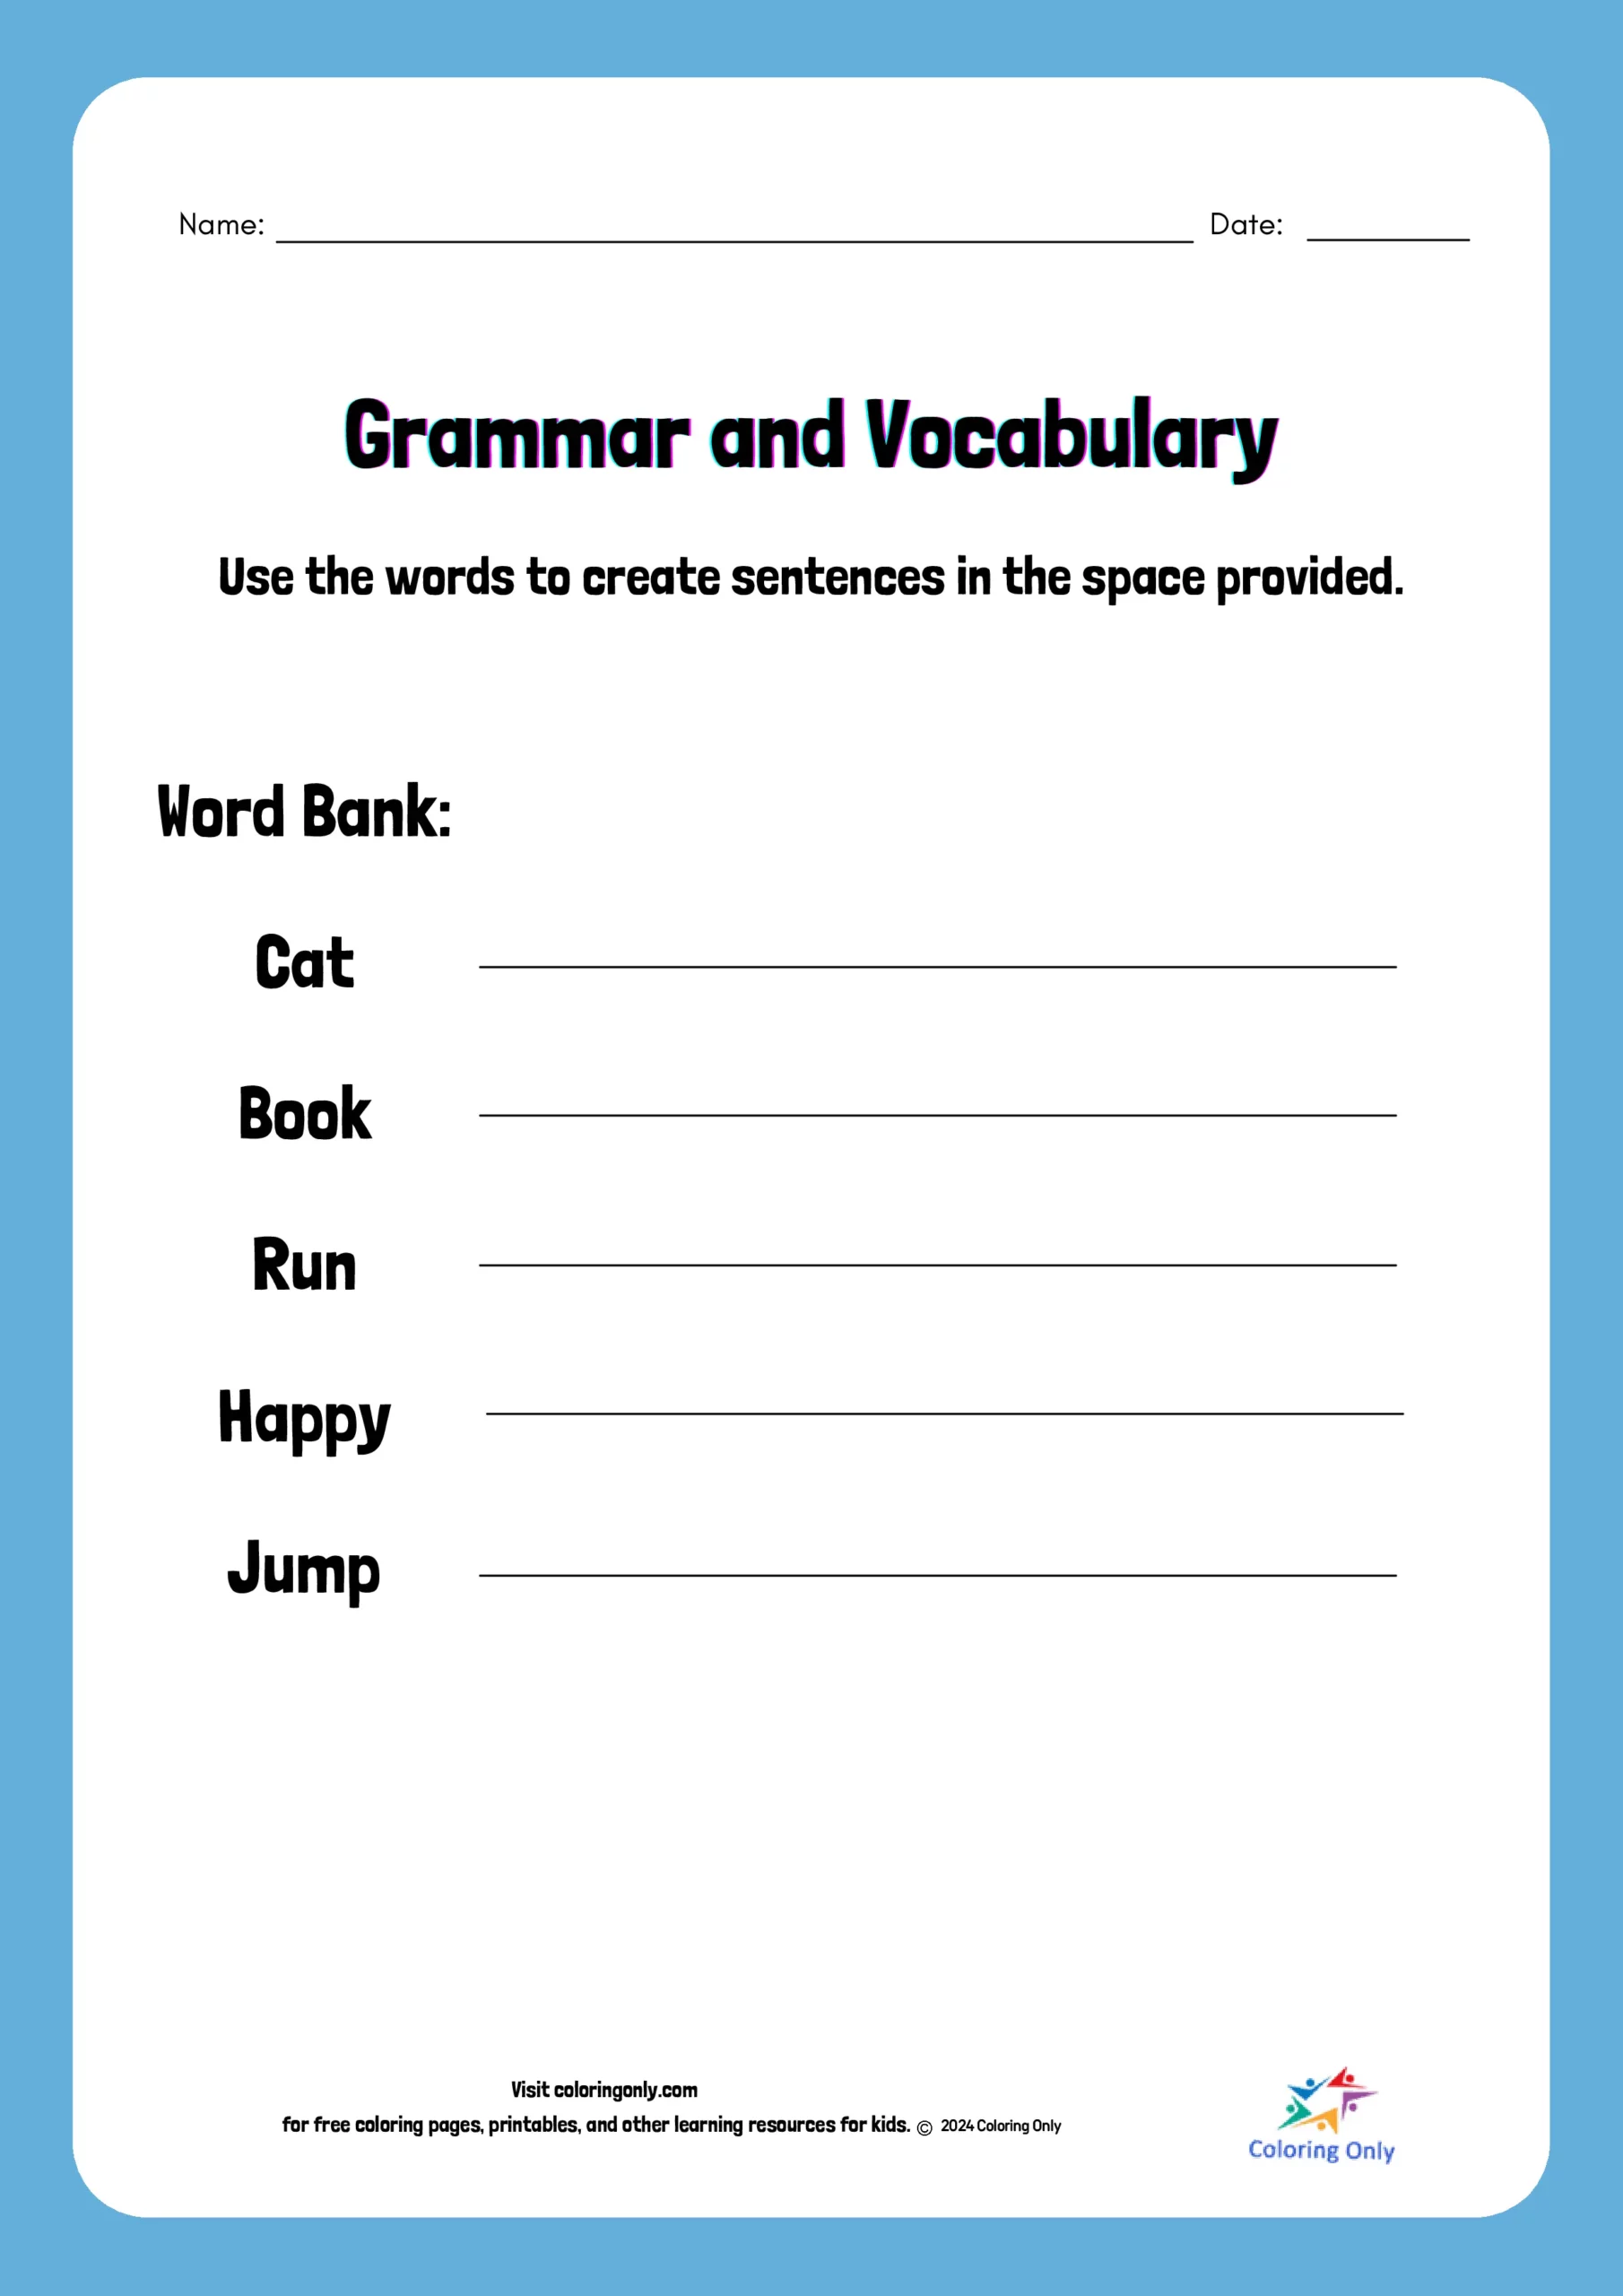 Grammar and Vocabulary Free Printable Worksheet